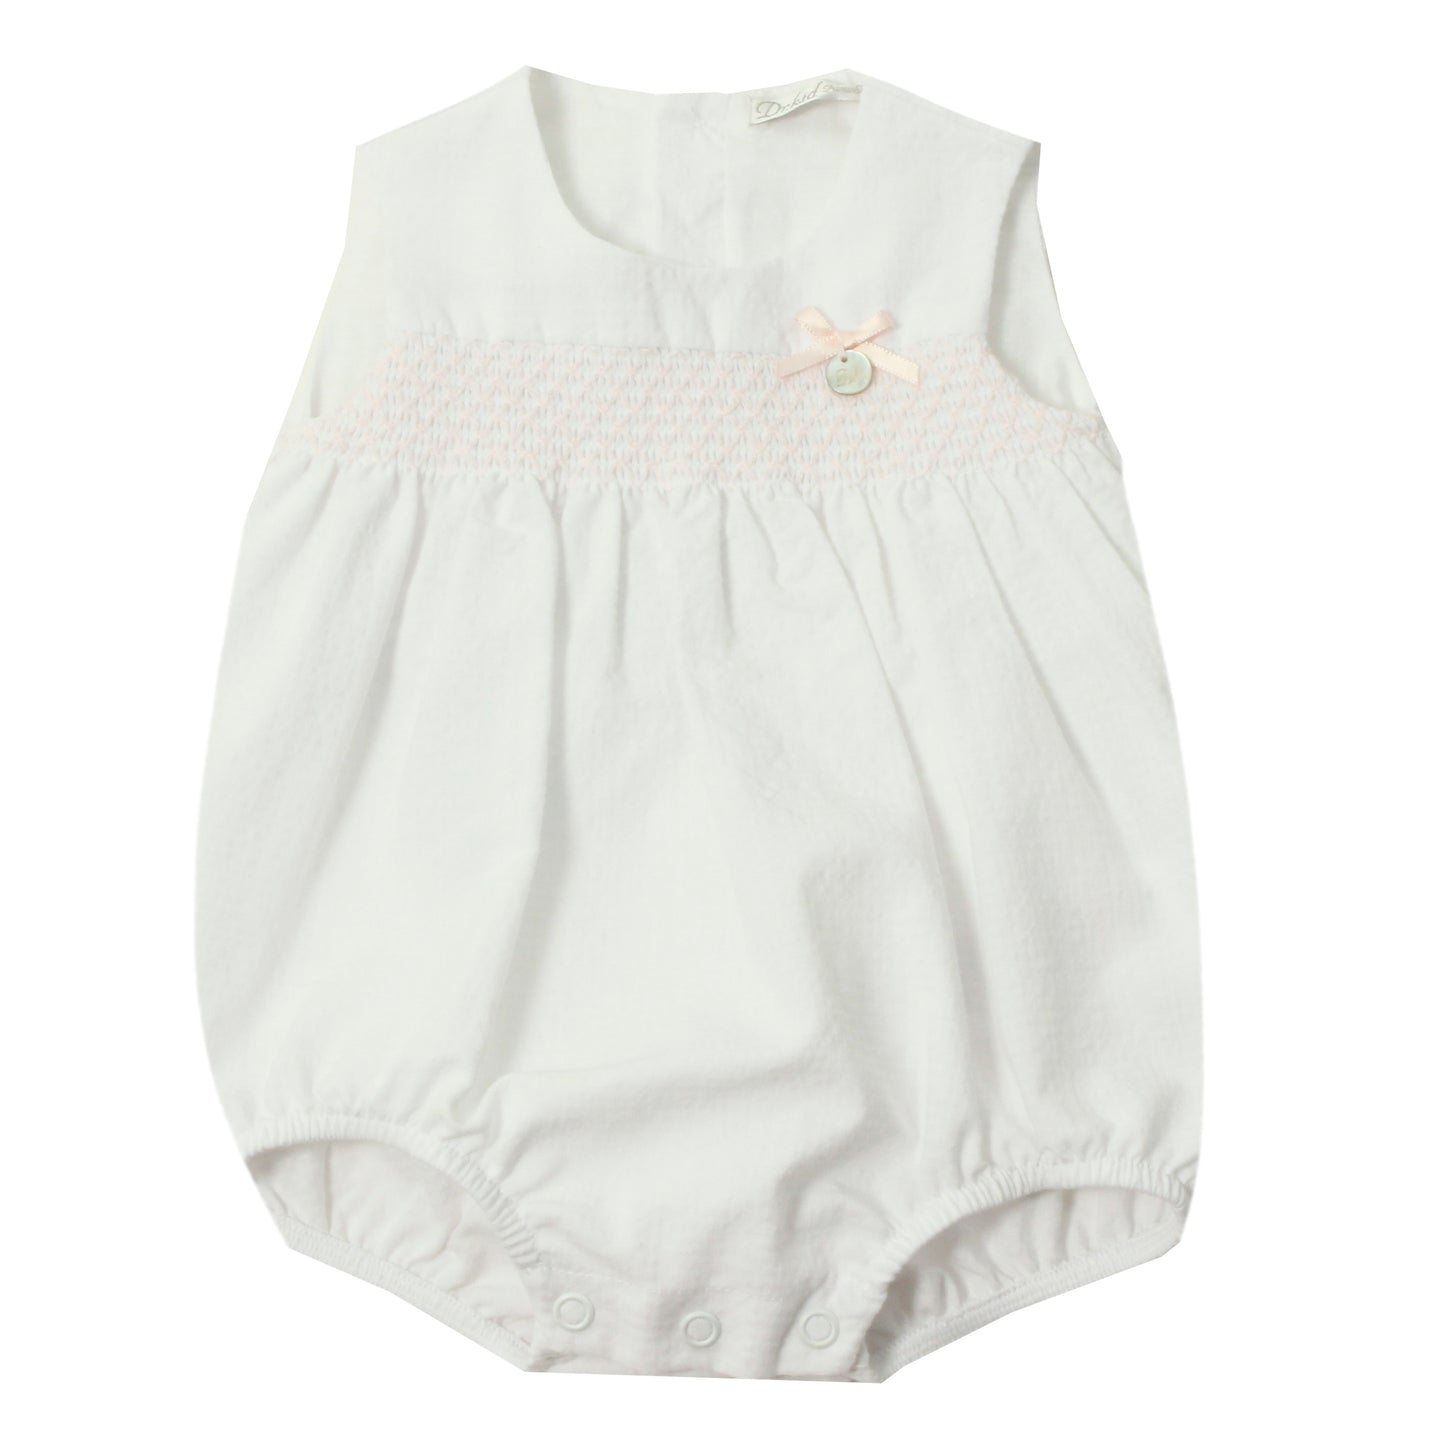 Baby girls white smocked romper for Summer - Adora Childrenswear 